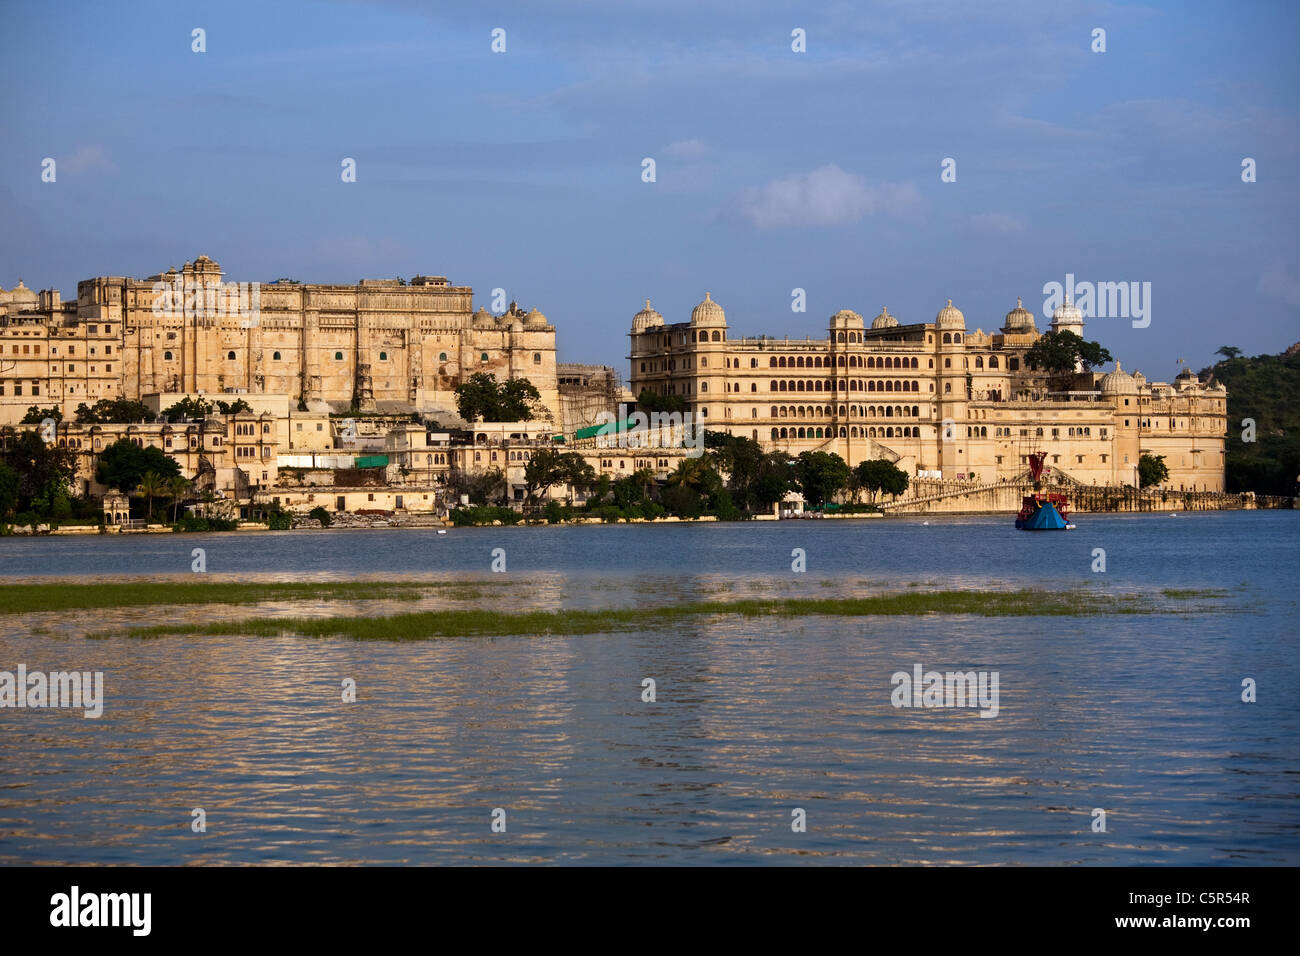 City Palace seen from lake pichola, Udaipur, Rajasthan. Stock Photo